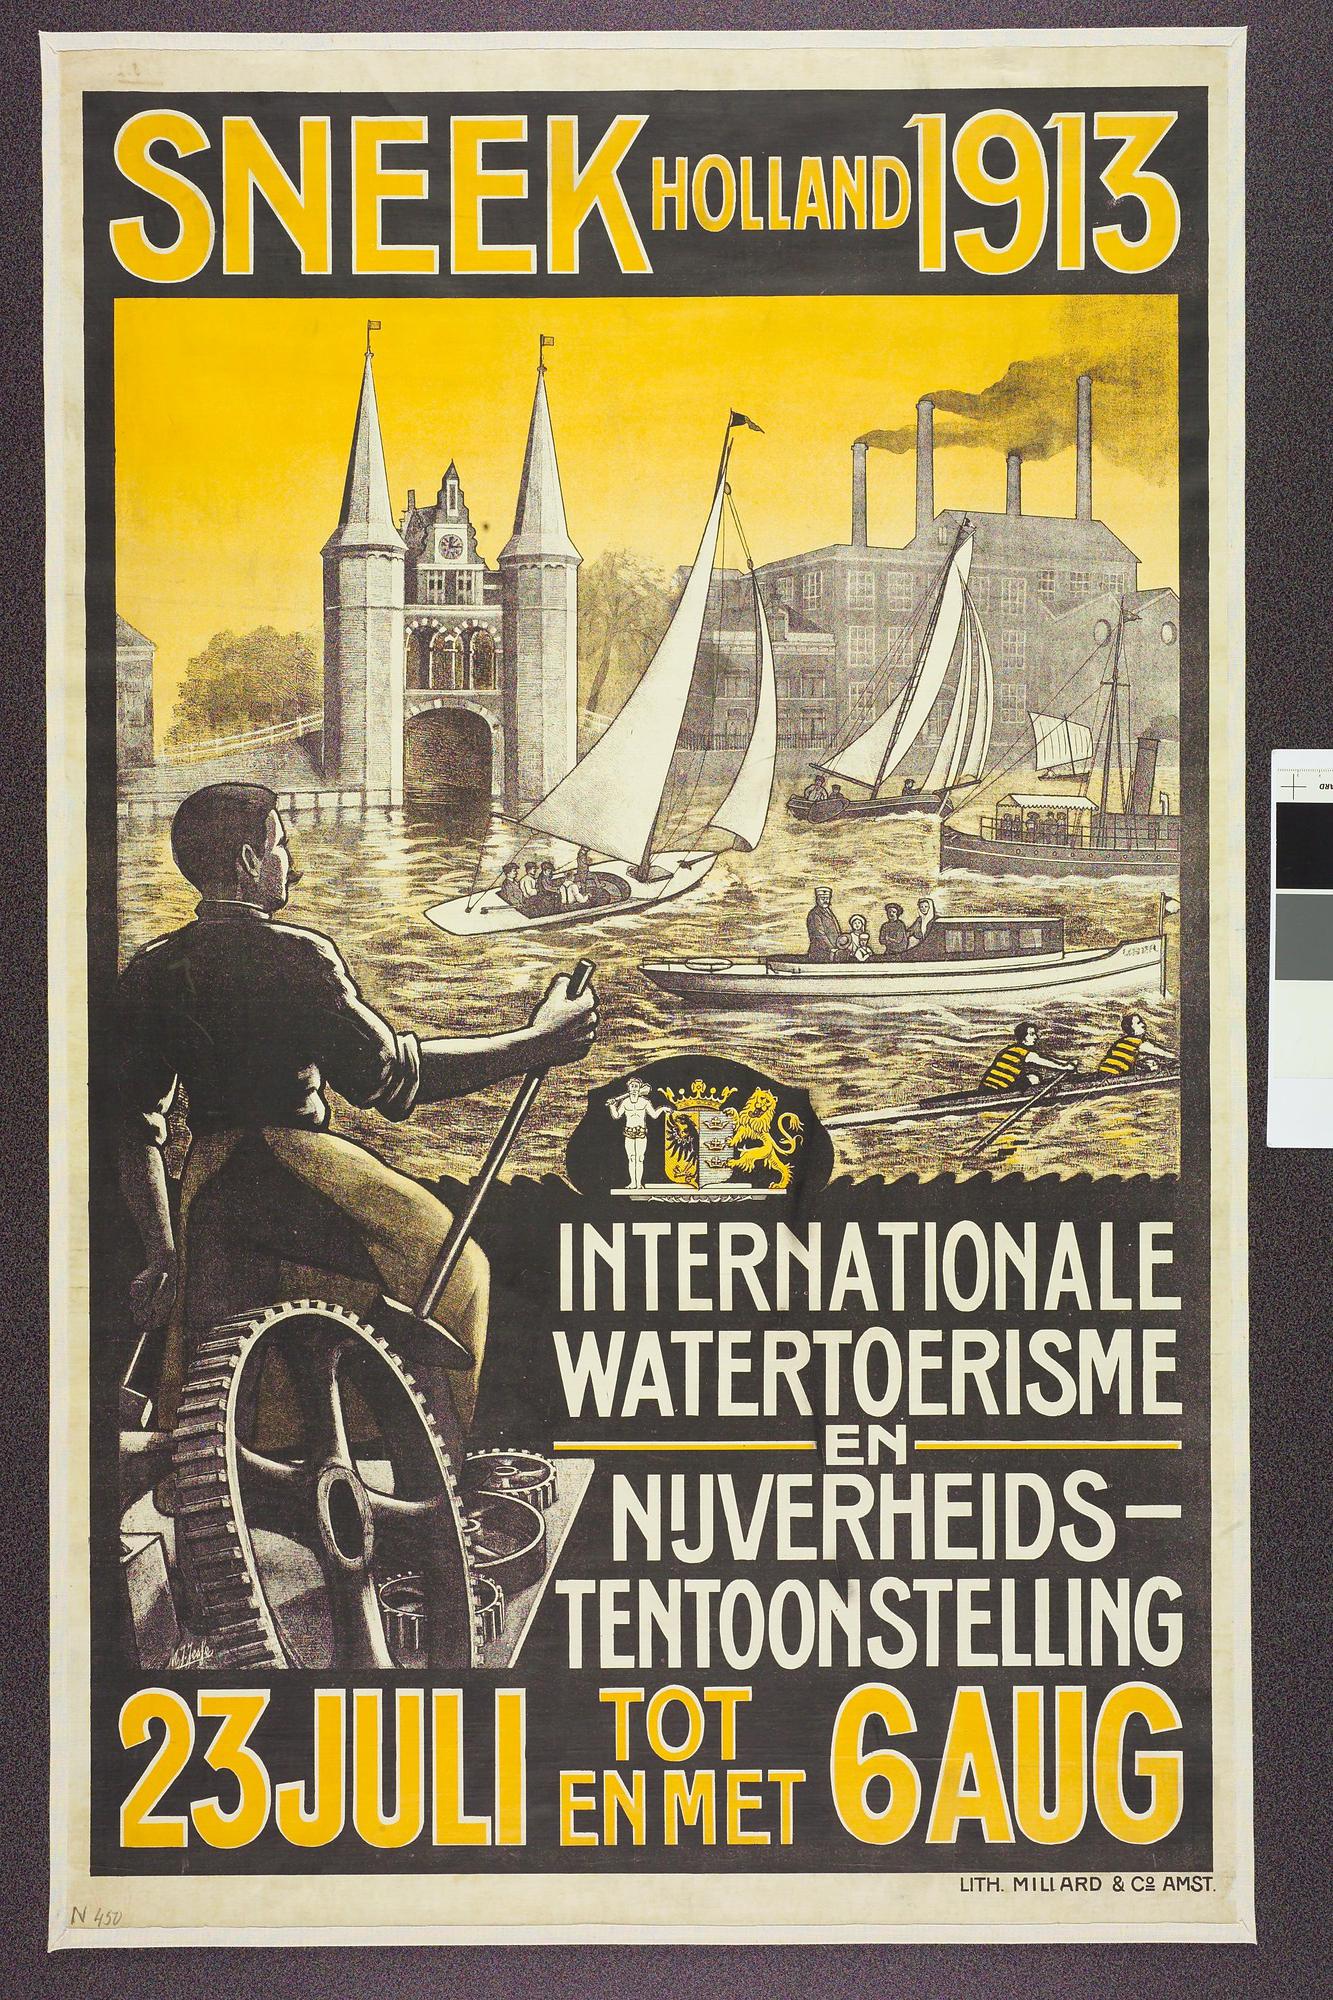 S.6762(18); 'De Internationale Watertourisme en Nijverheidstentoonstelling te Sneek', 1913; affiche